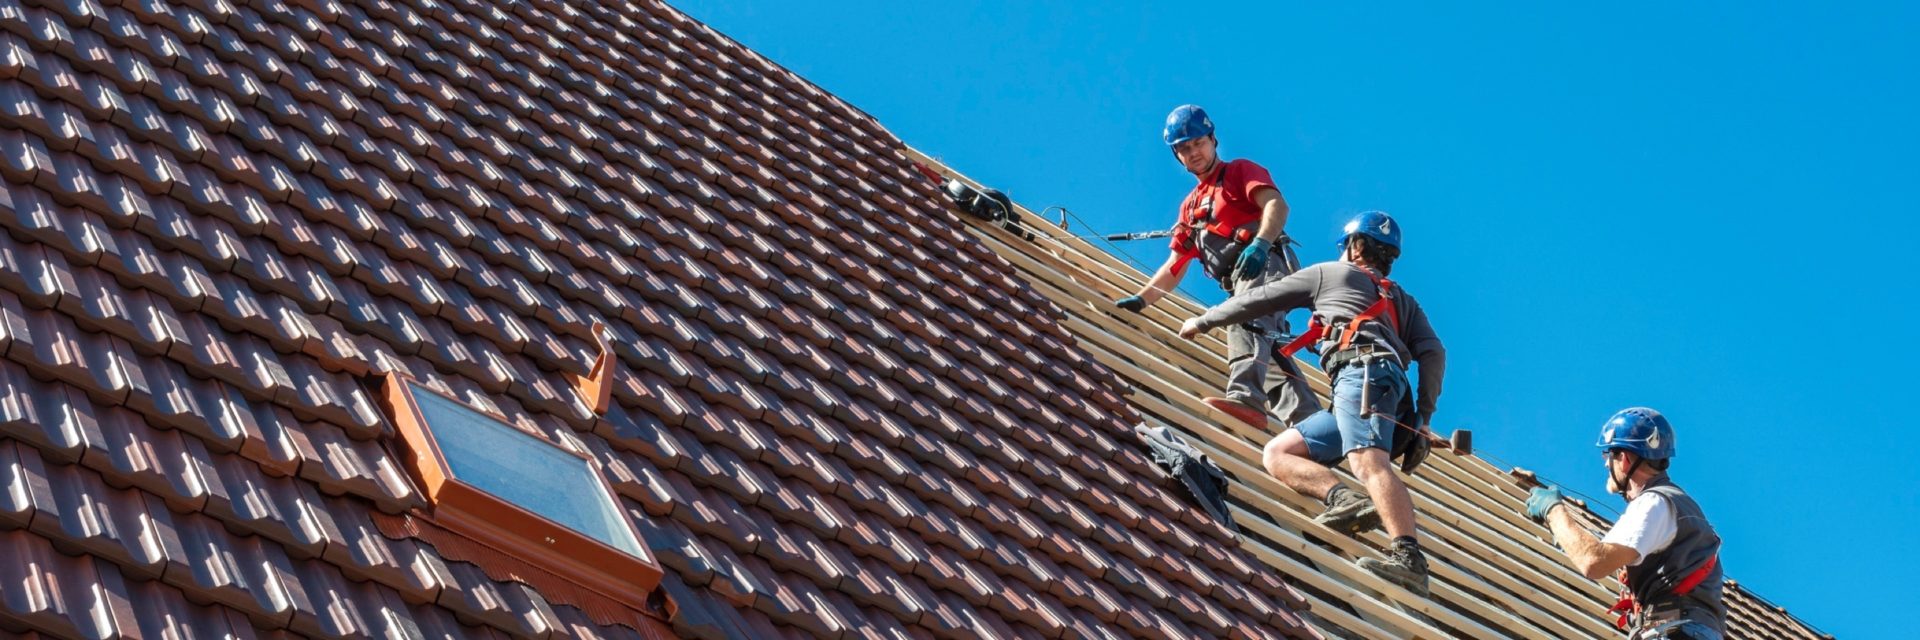 Roofing Contractor Companies In Augusta